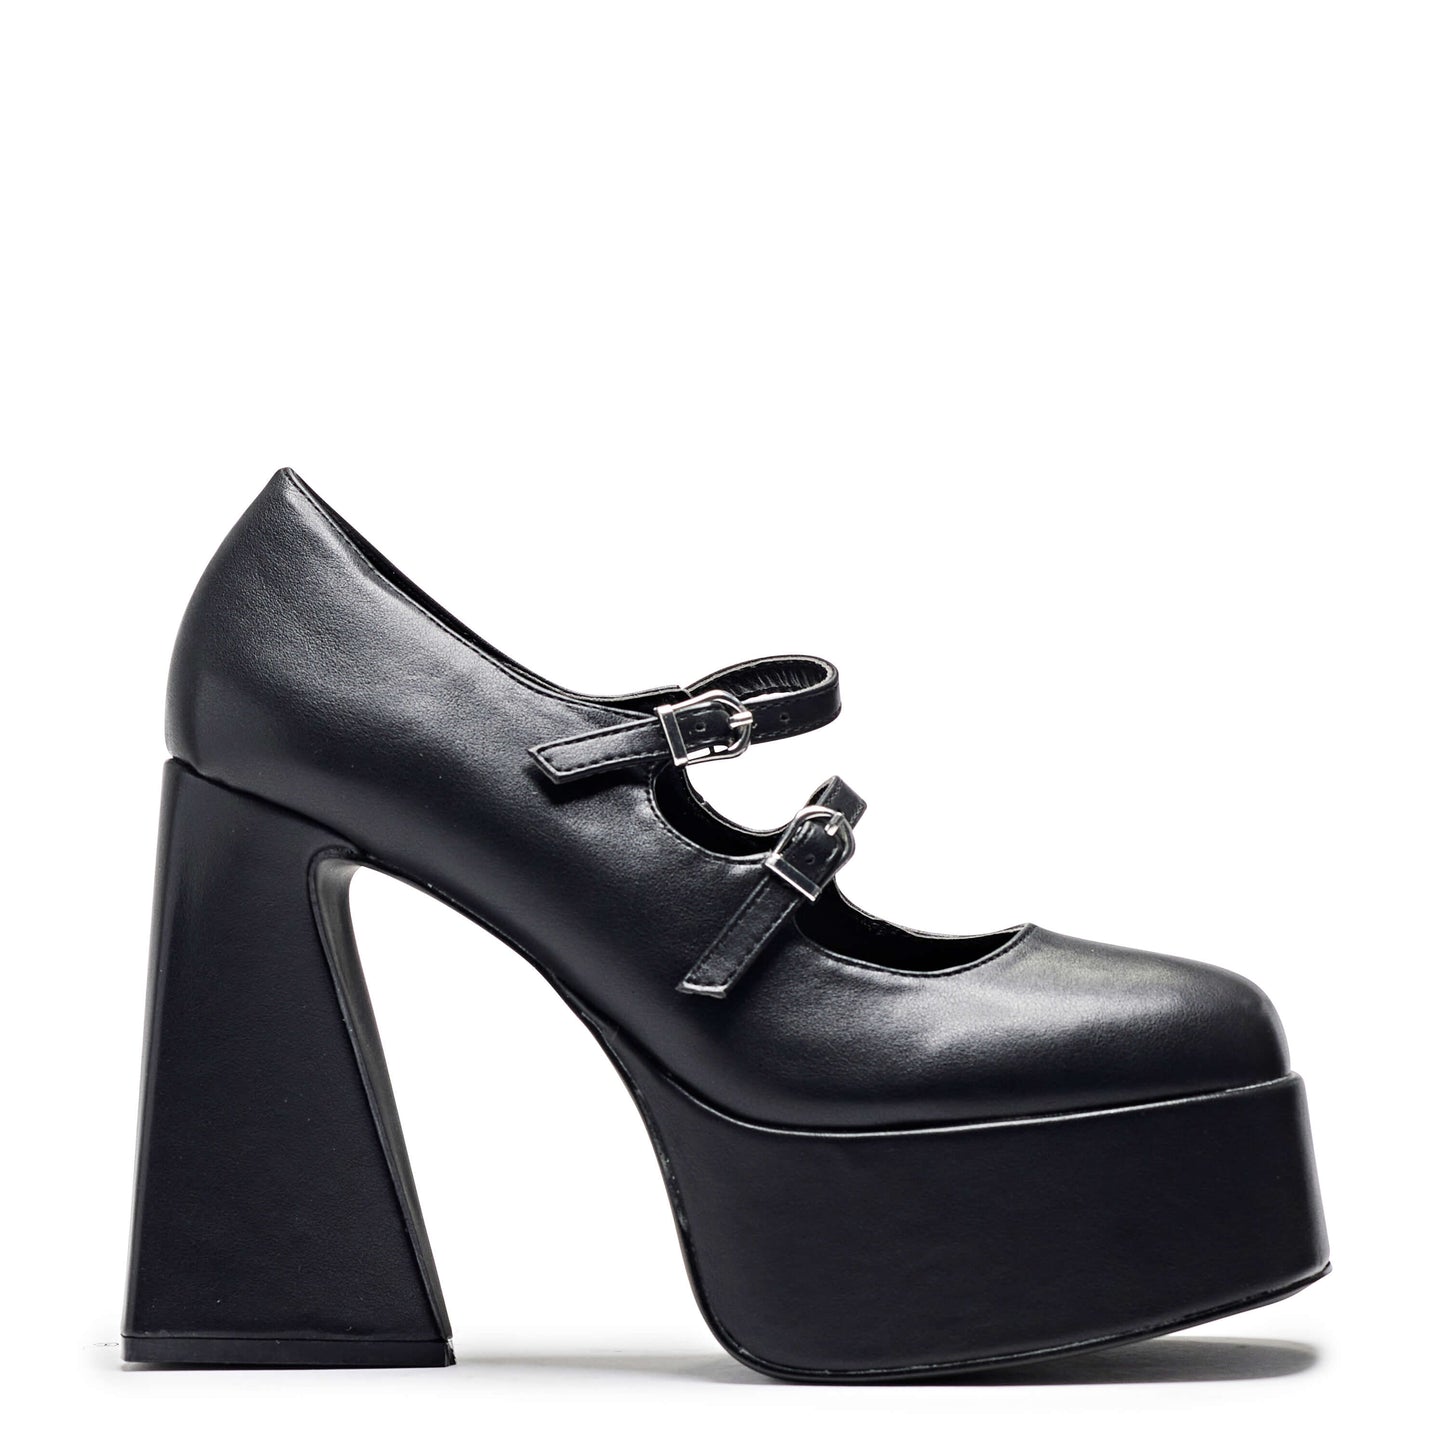 Zeba Black Platform Heels - Shoes - KOI Footwear - Black - Main View